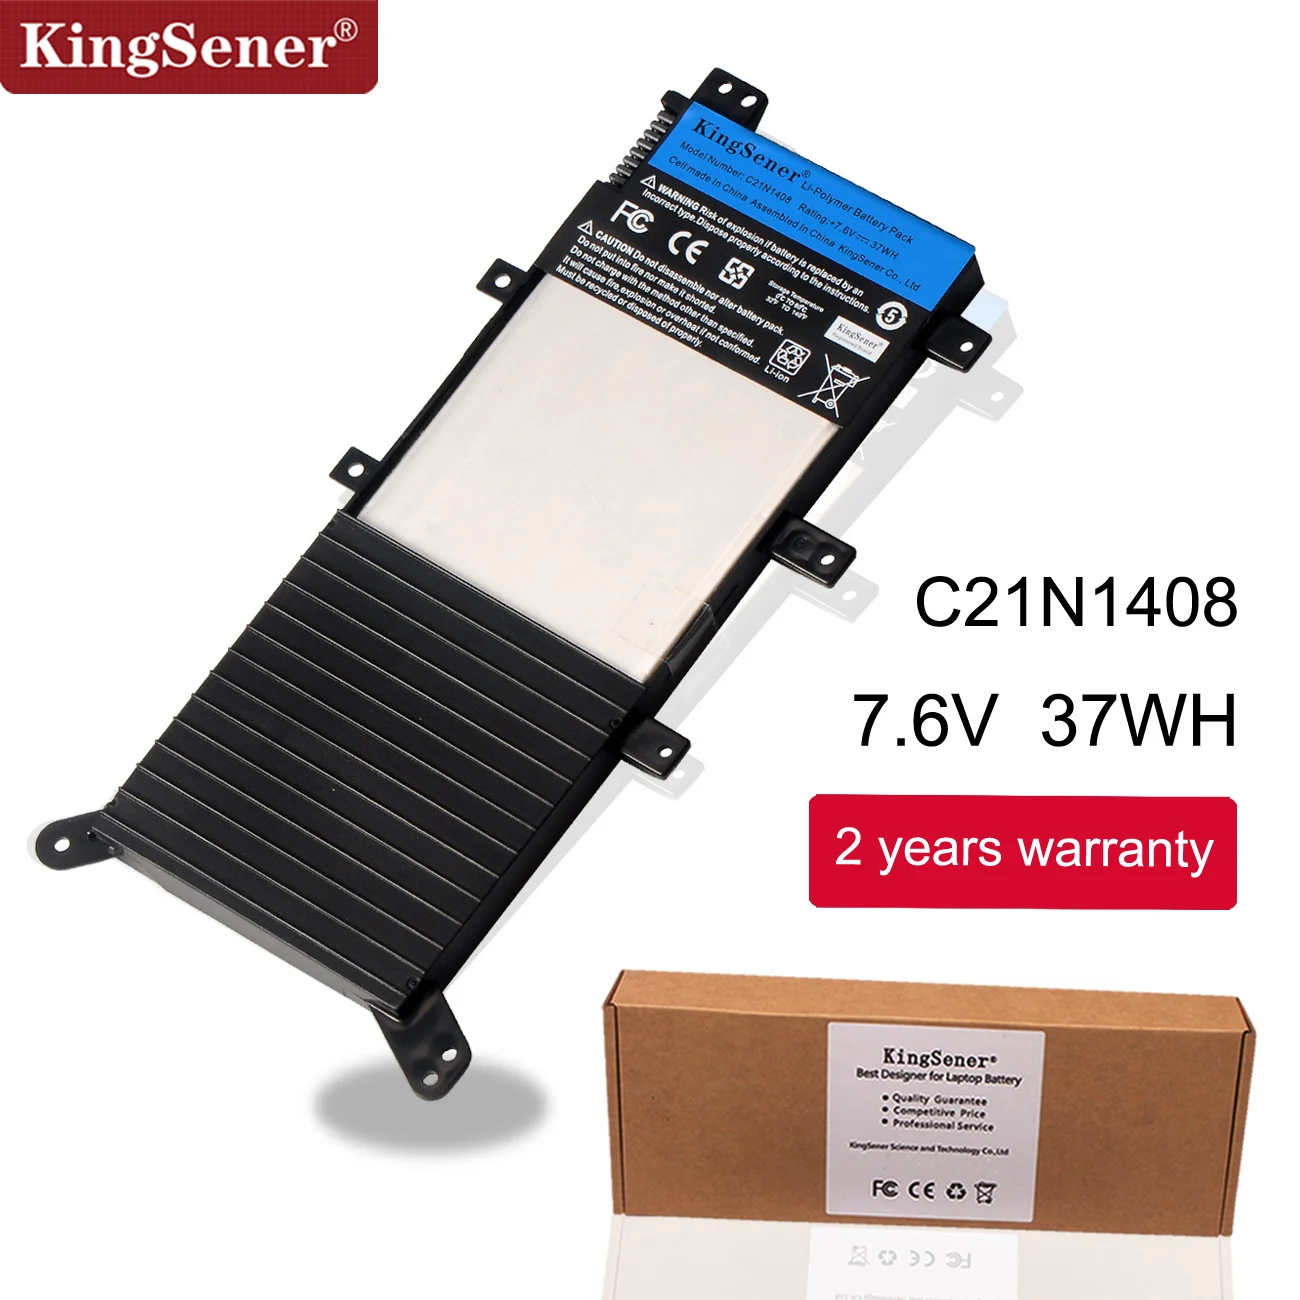 KingSener C21N1408 Аккумулятор для ноутбука Asus VivoBook 4000 MX555 V555L V555LB V555U серии 7,6 V 37WH гарантия 2 года